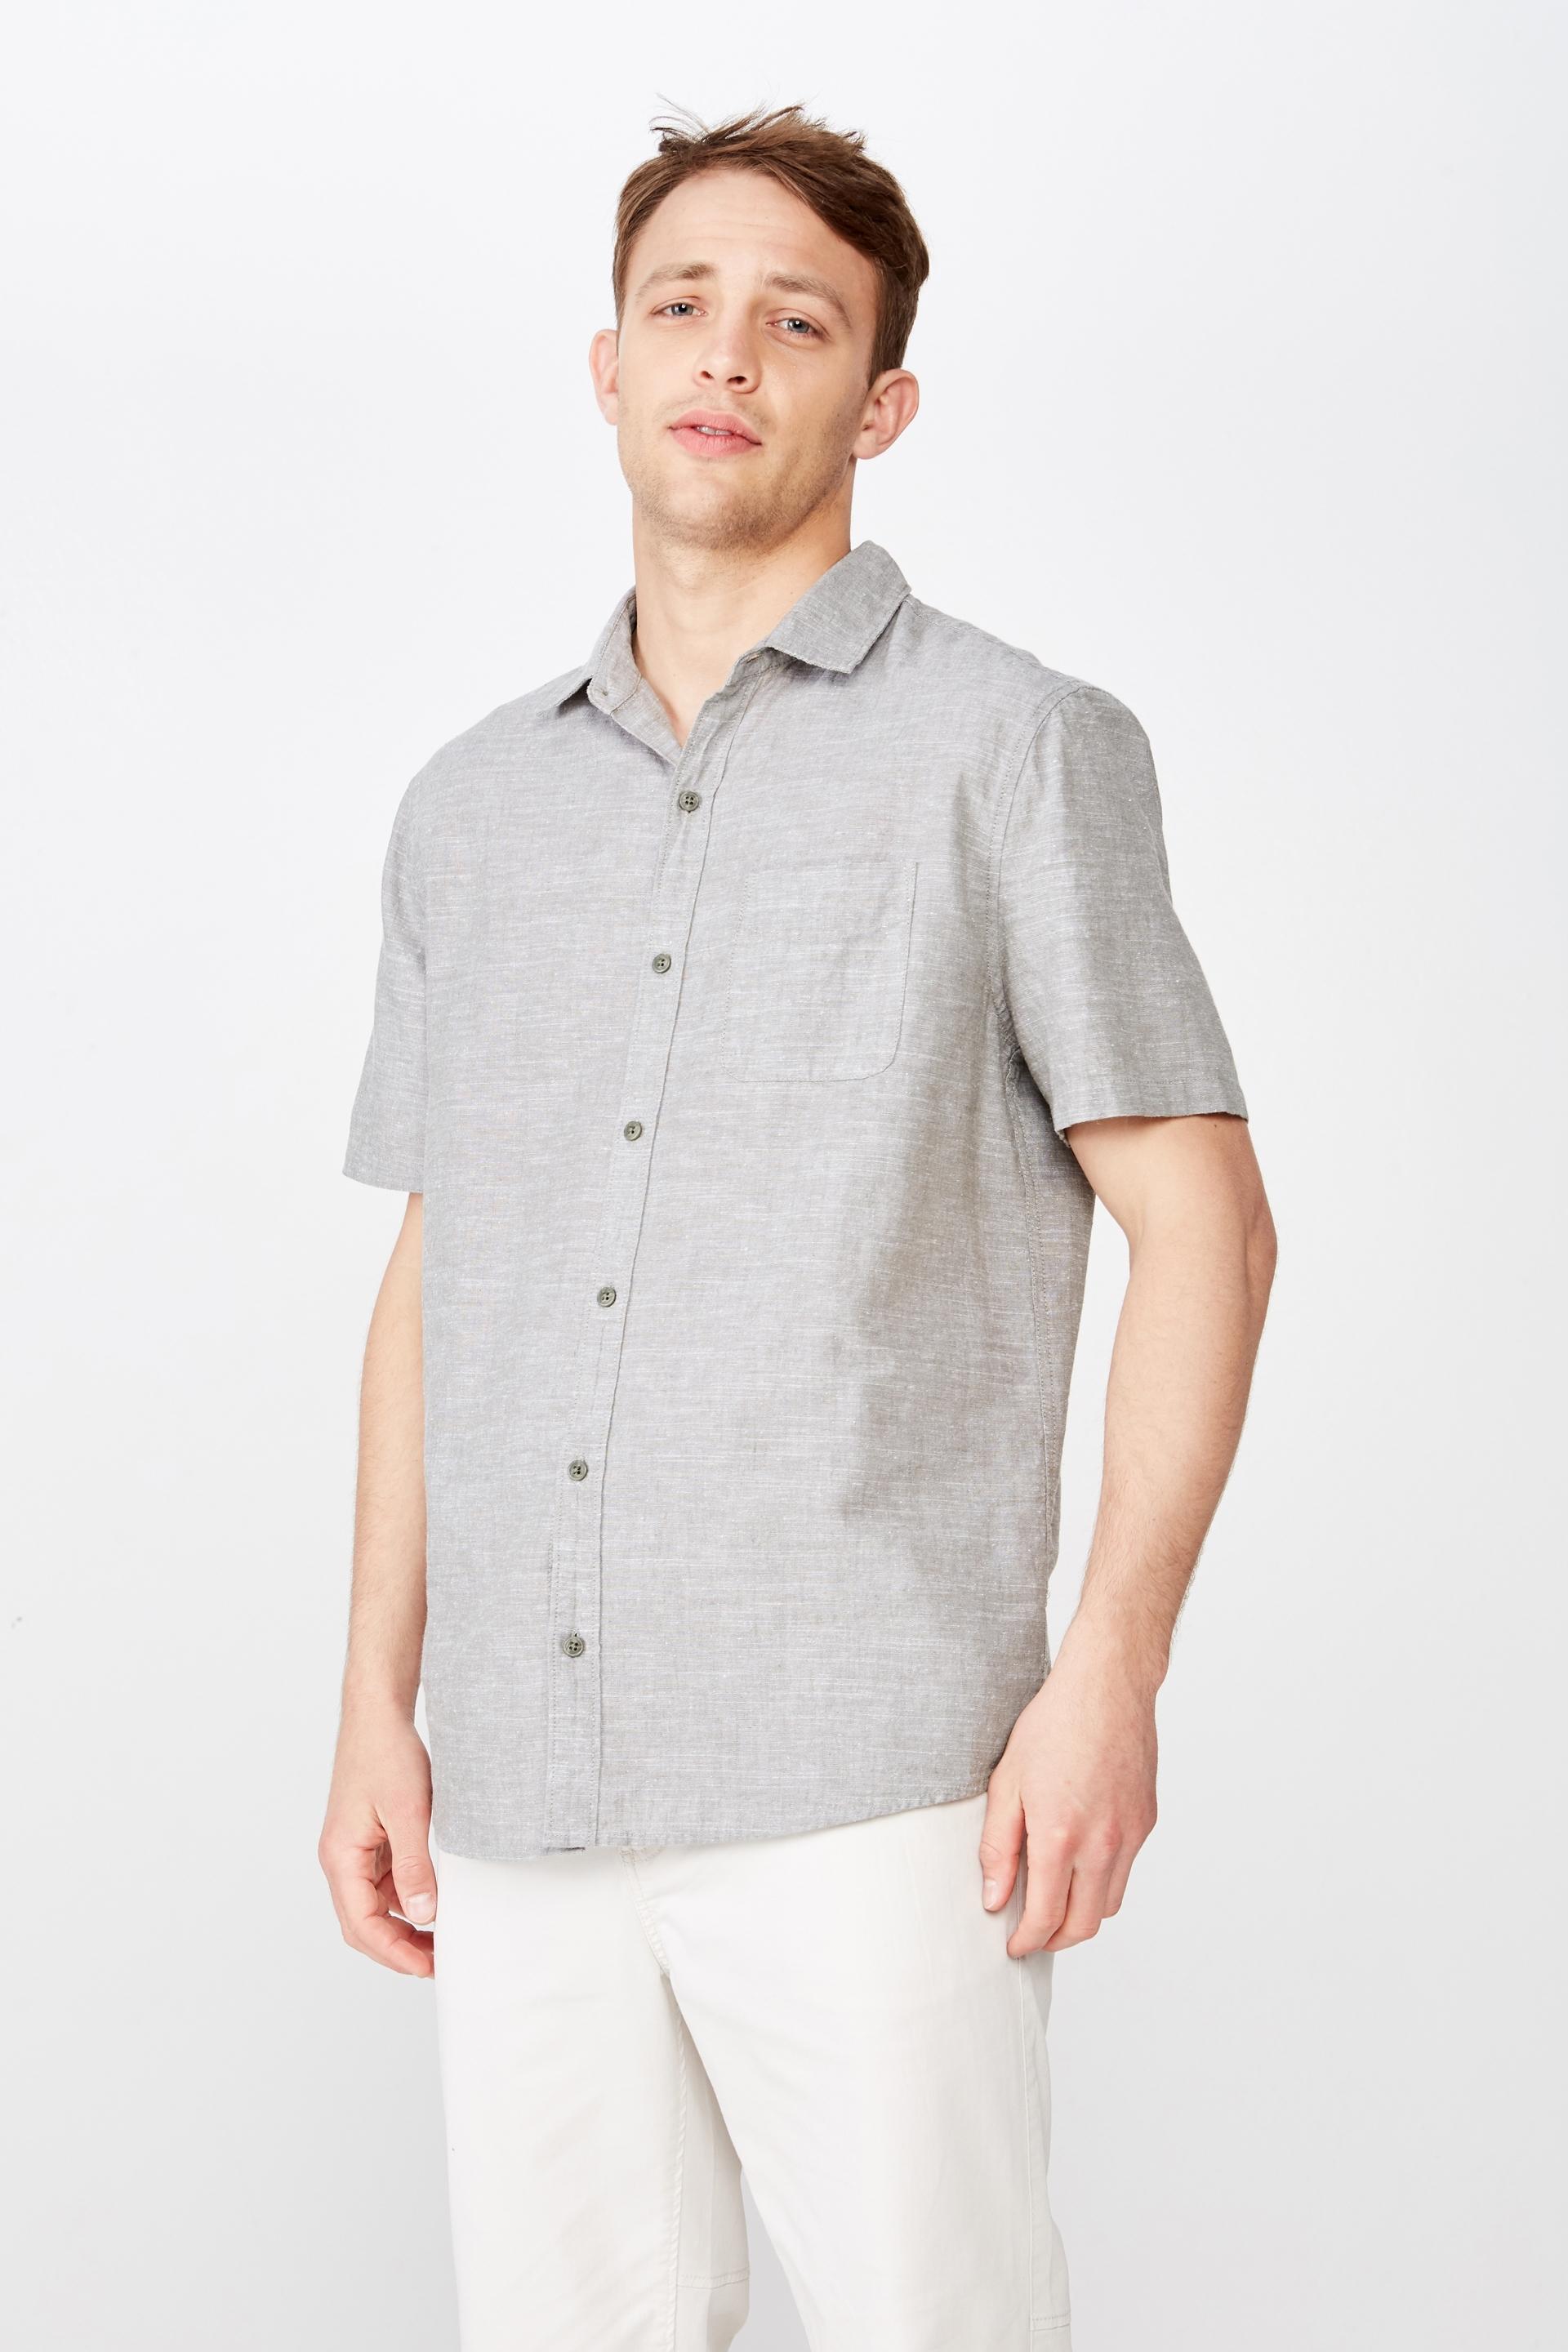 Premium linen/cotton short sleeve shirt - sage/white Cotton On Shirts ...